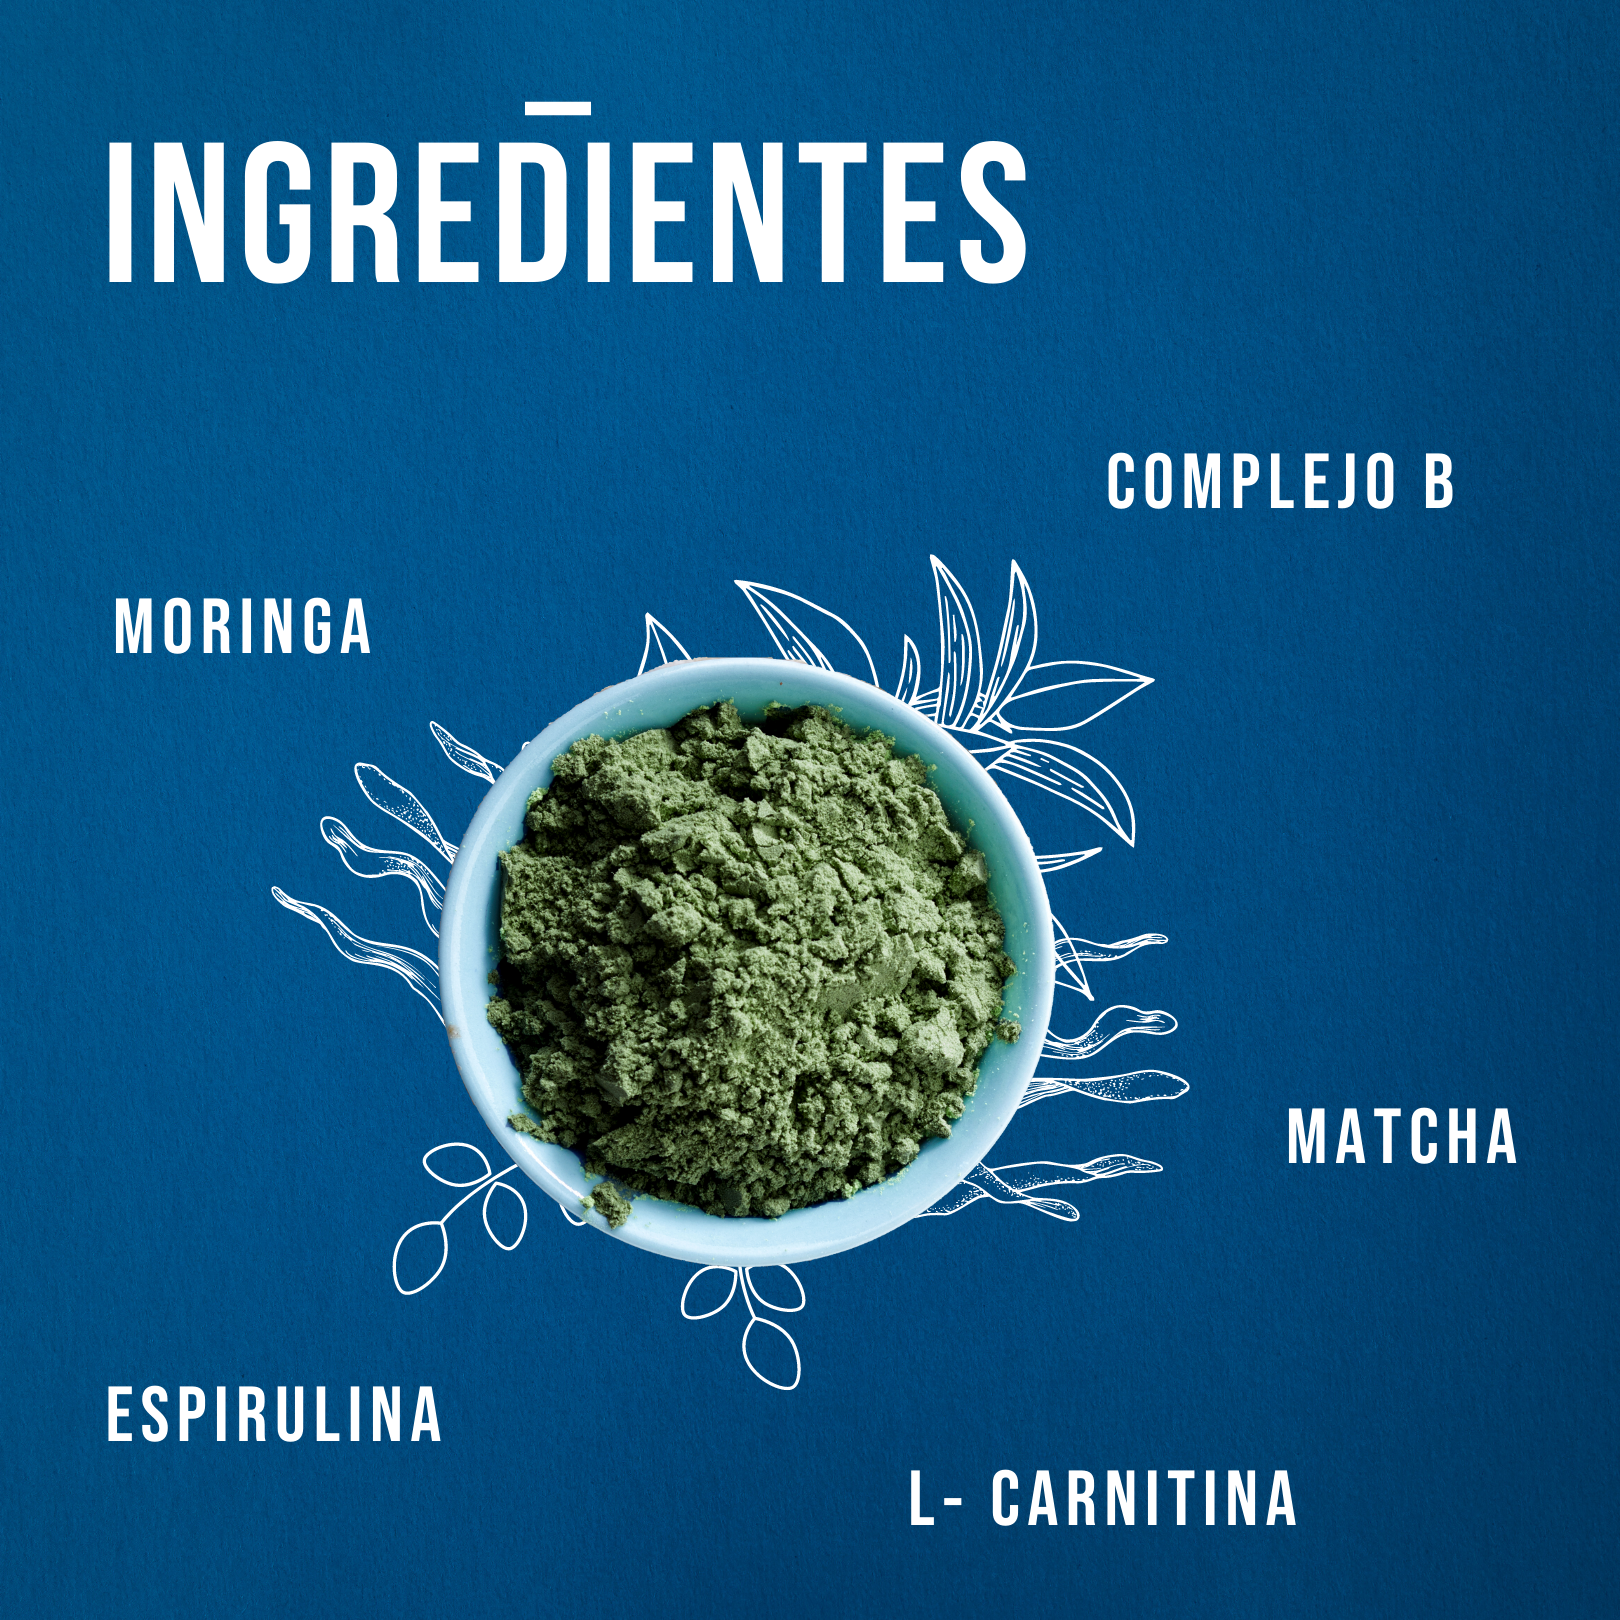 Taiso Bro Veganas con Matcha, Espirulina, Moringa, L-Carnitina, Complejo B. (Energía y reductor natural)